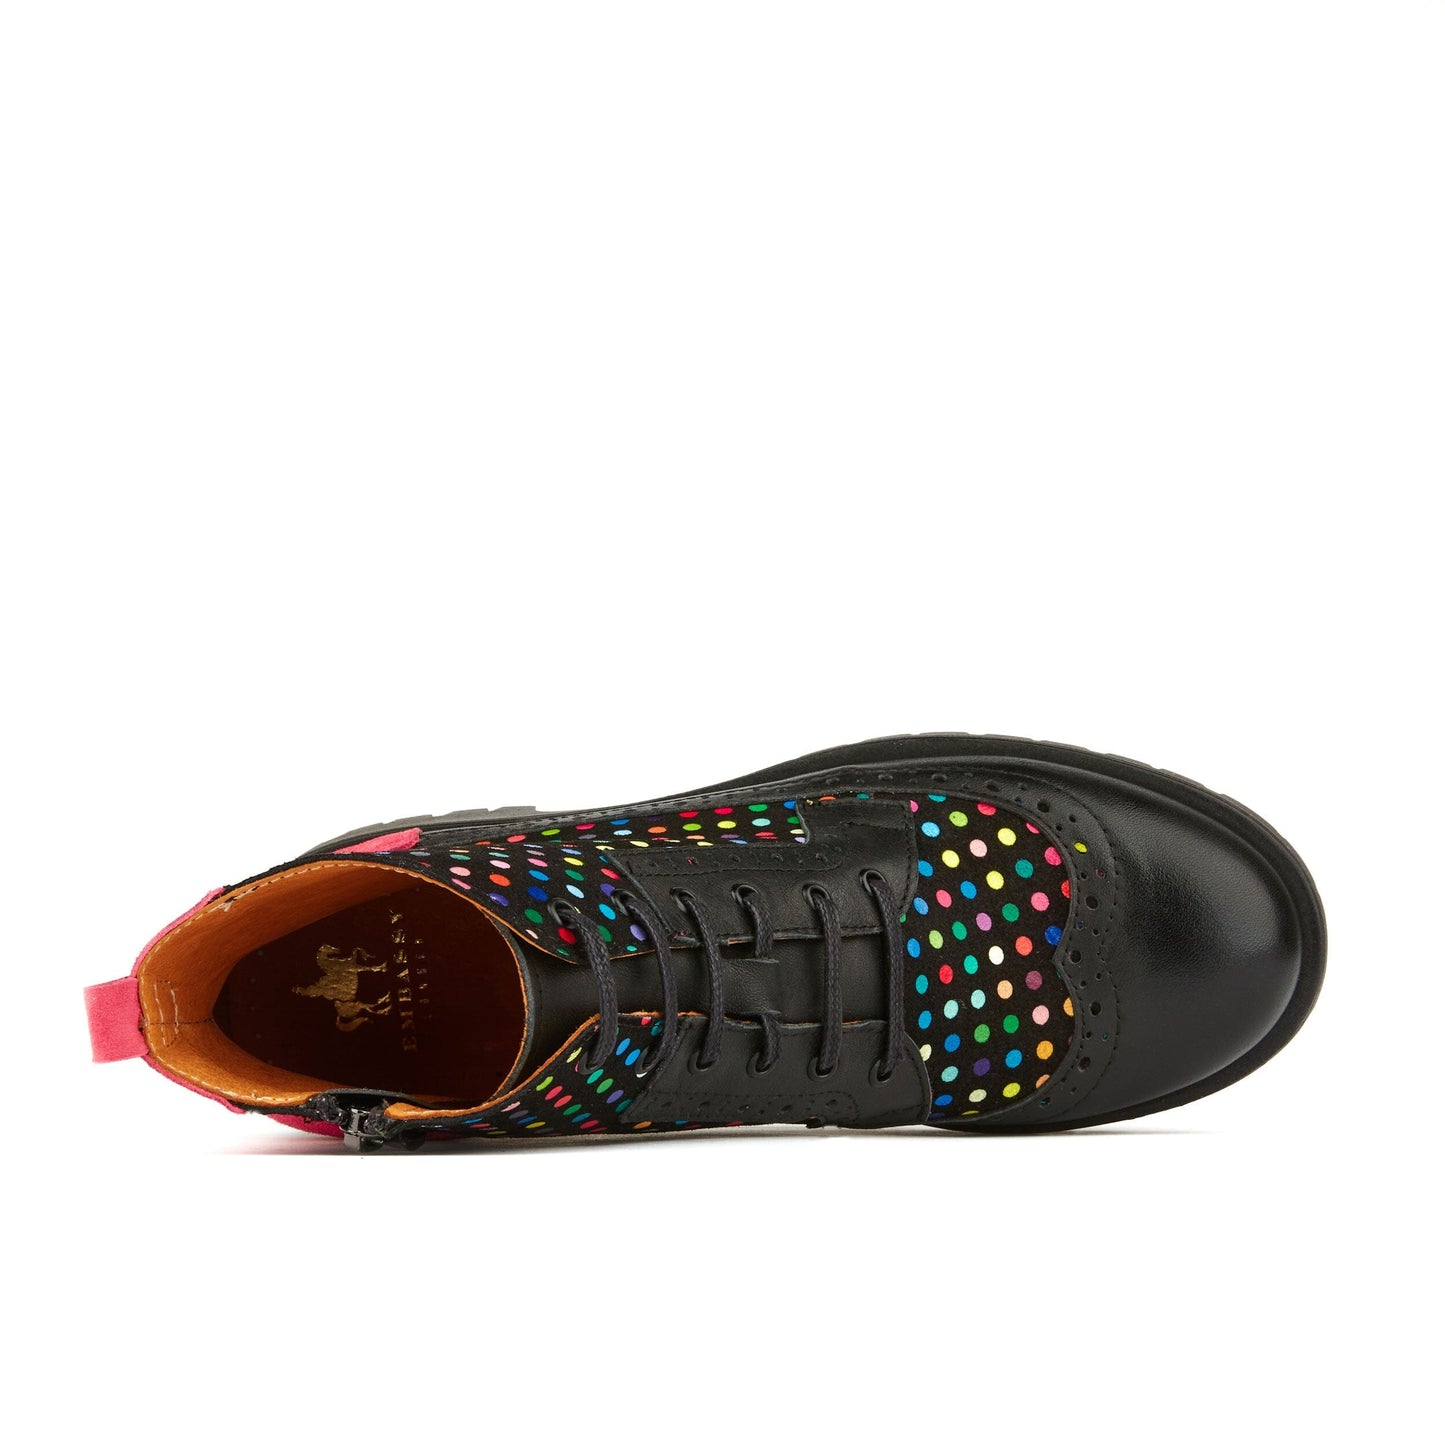 Hatter Platform - Black & Pink & Multi Disco Dots Womens Ankle Boots Embassy London 